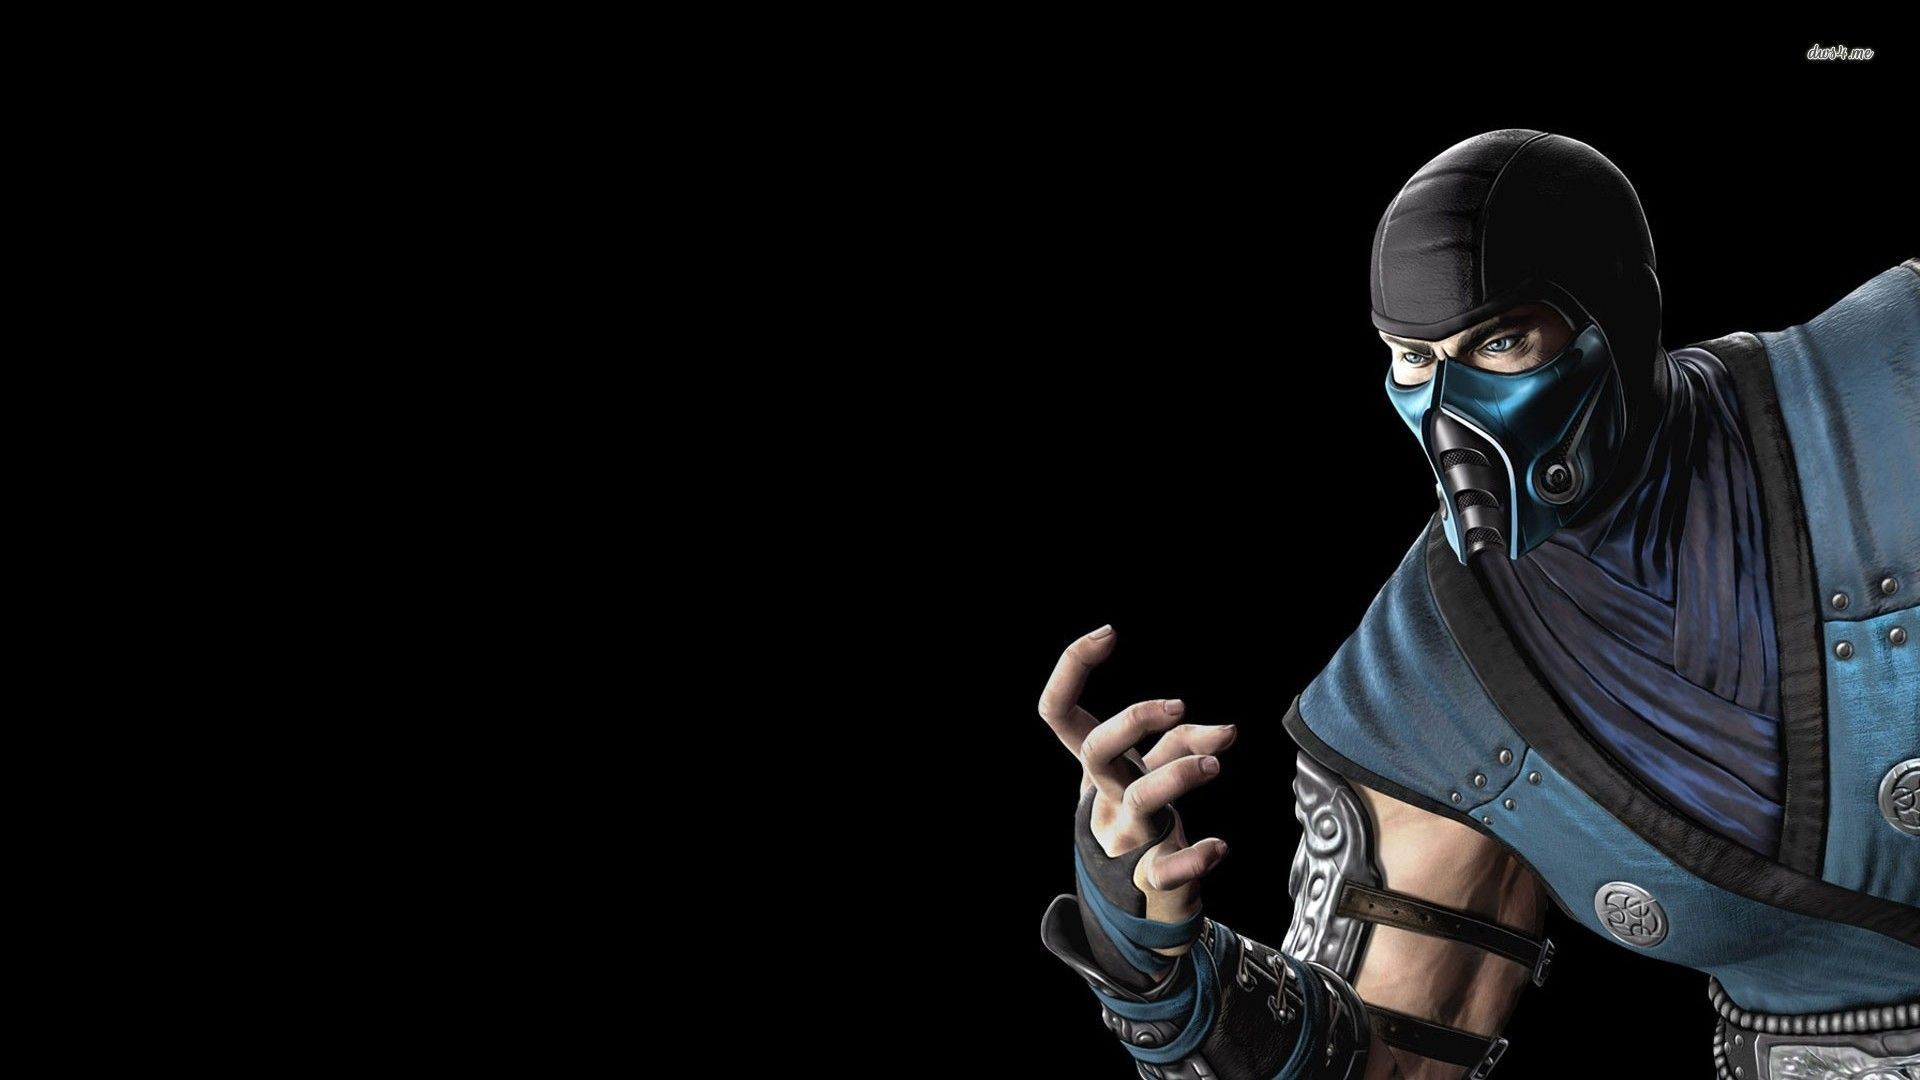 Sub-Zero - Mortal Kombat wallpaper - Game wallpapers - #8020